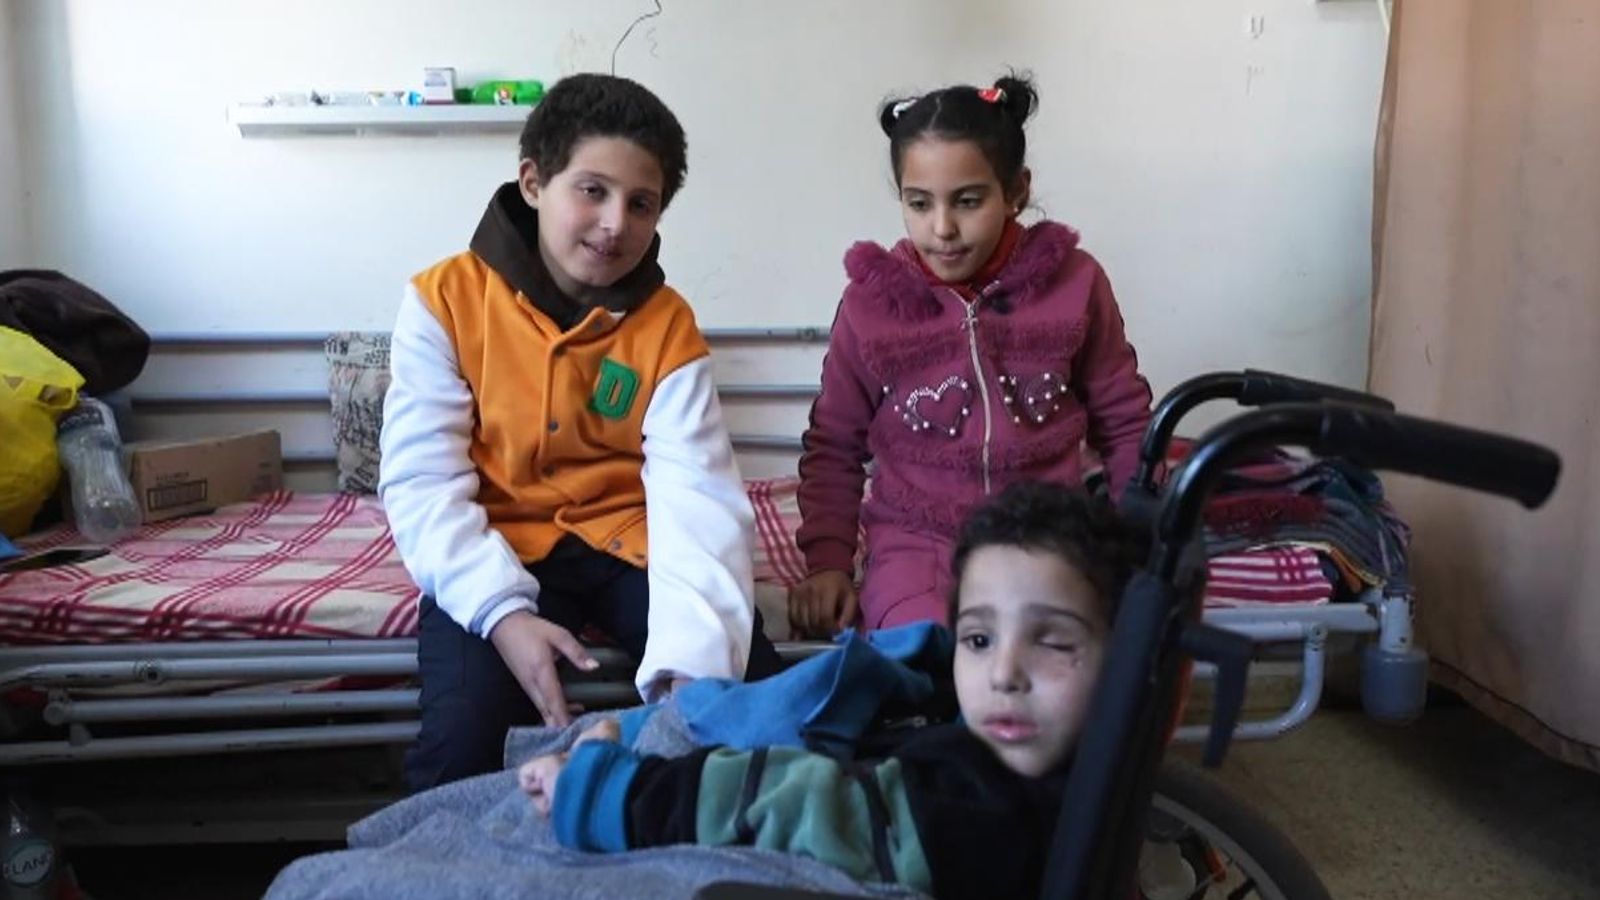 Israel - Hamas war: Palestinian siblings see parents killed in IDF raid